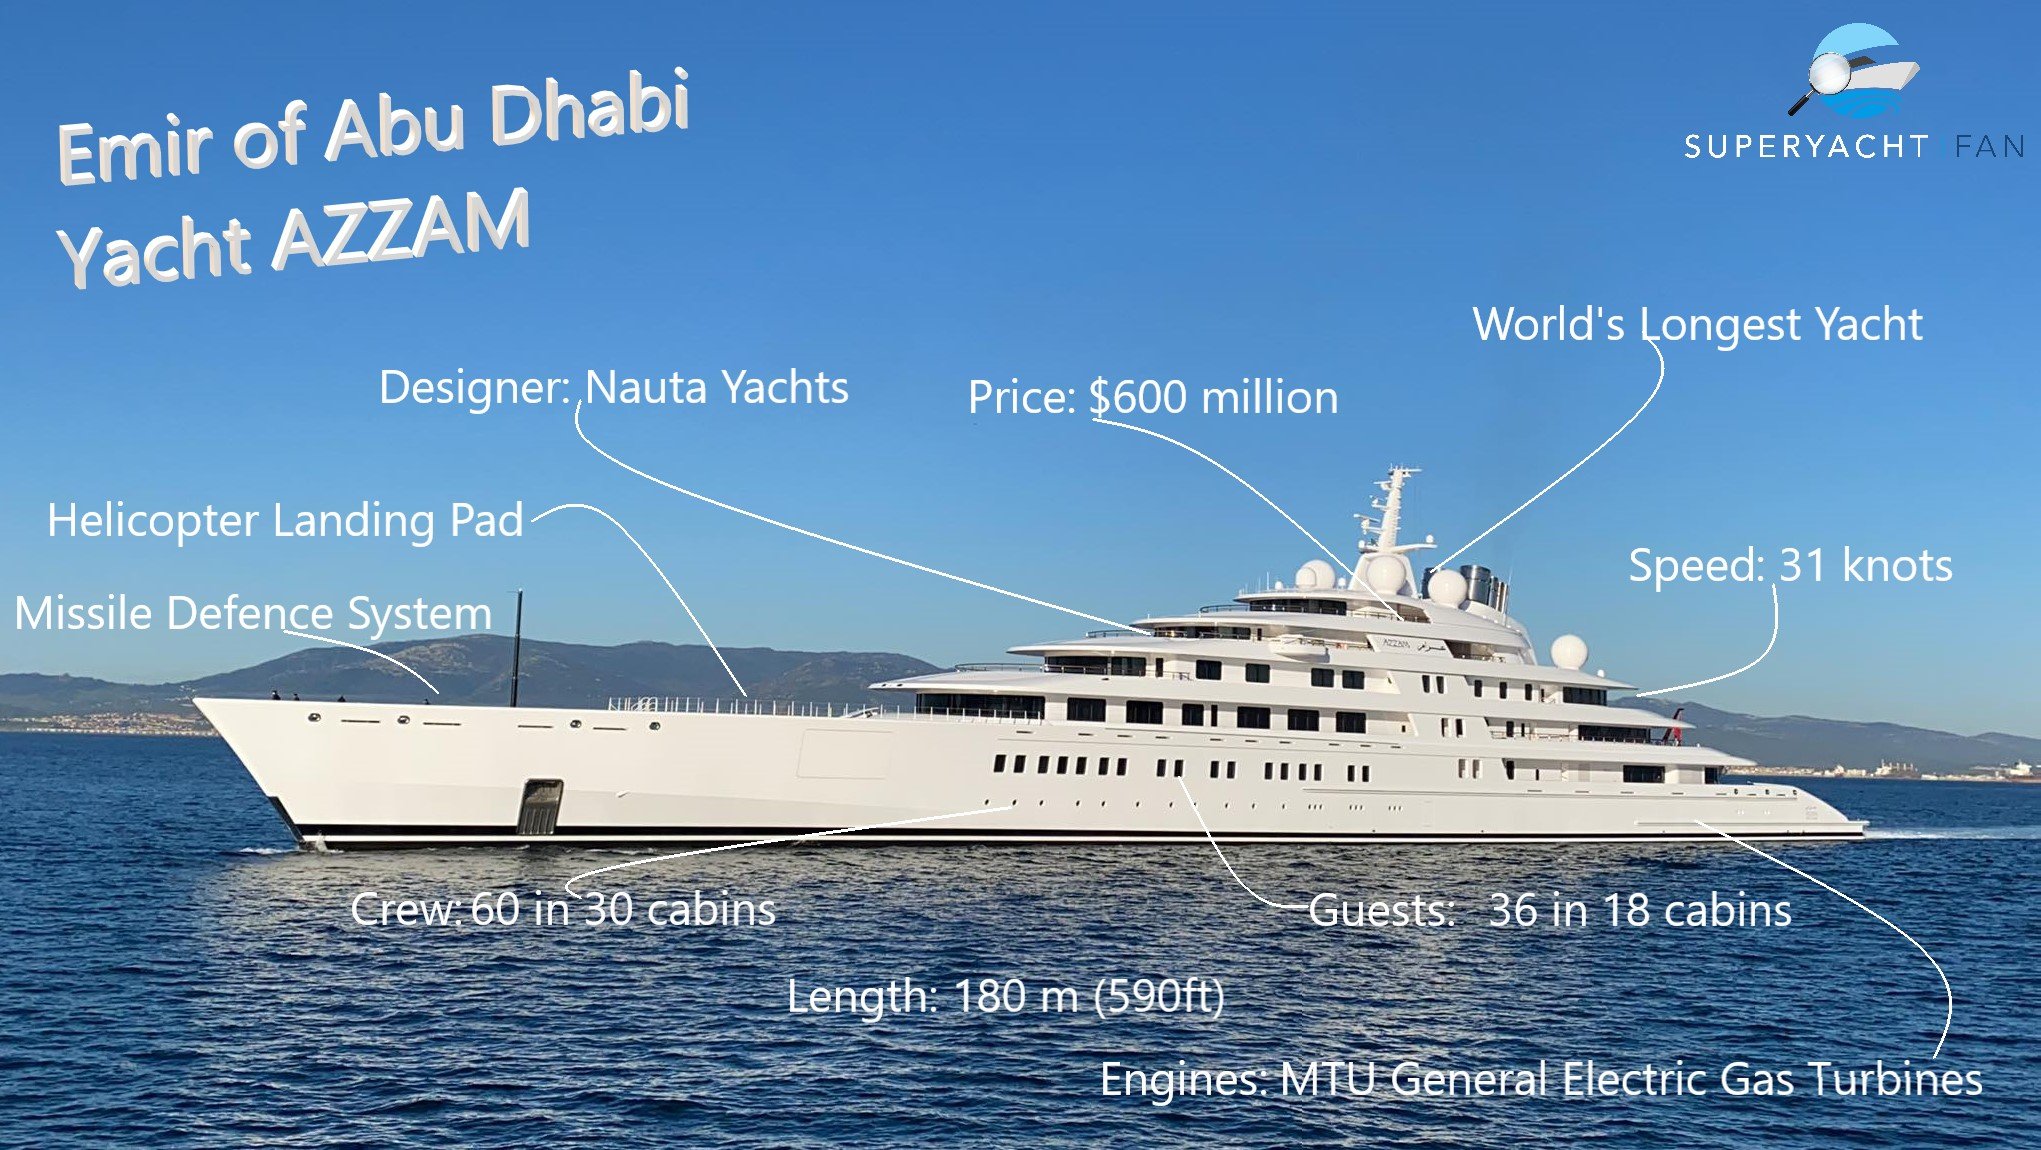 AZZAM Yacht Emiro di Abu Dhabi